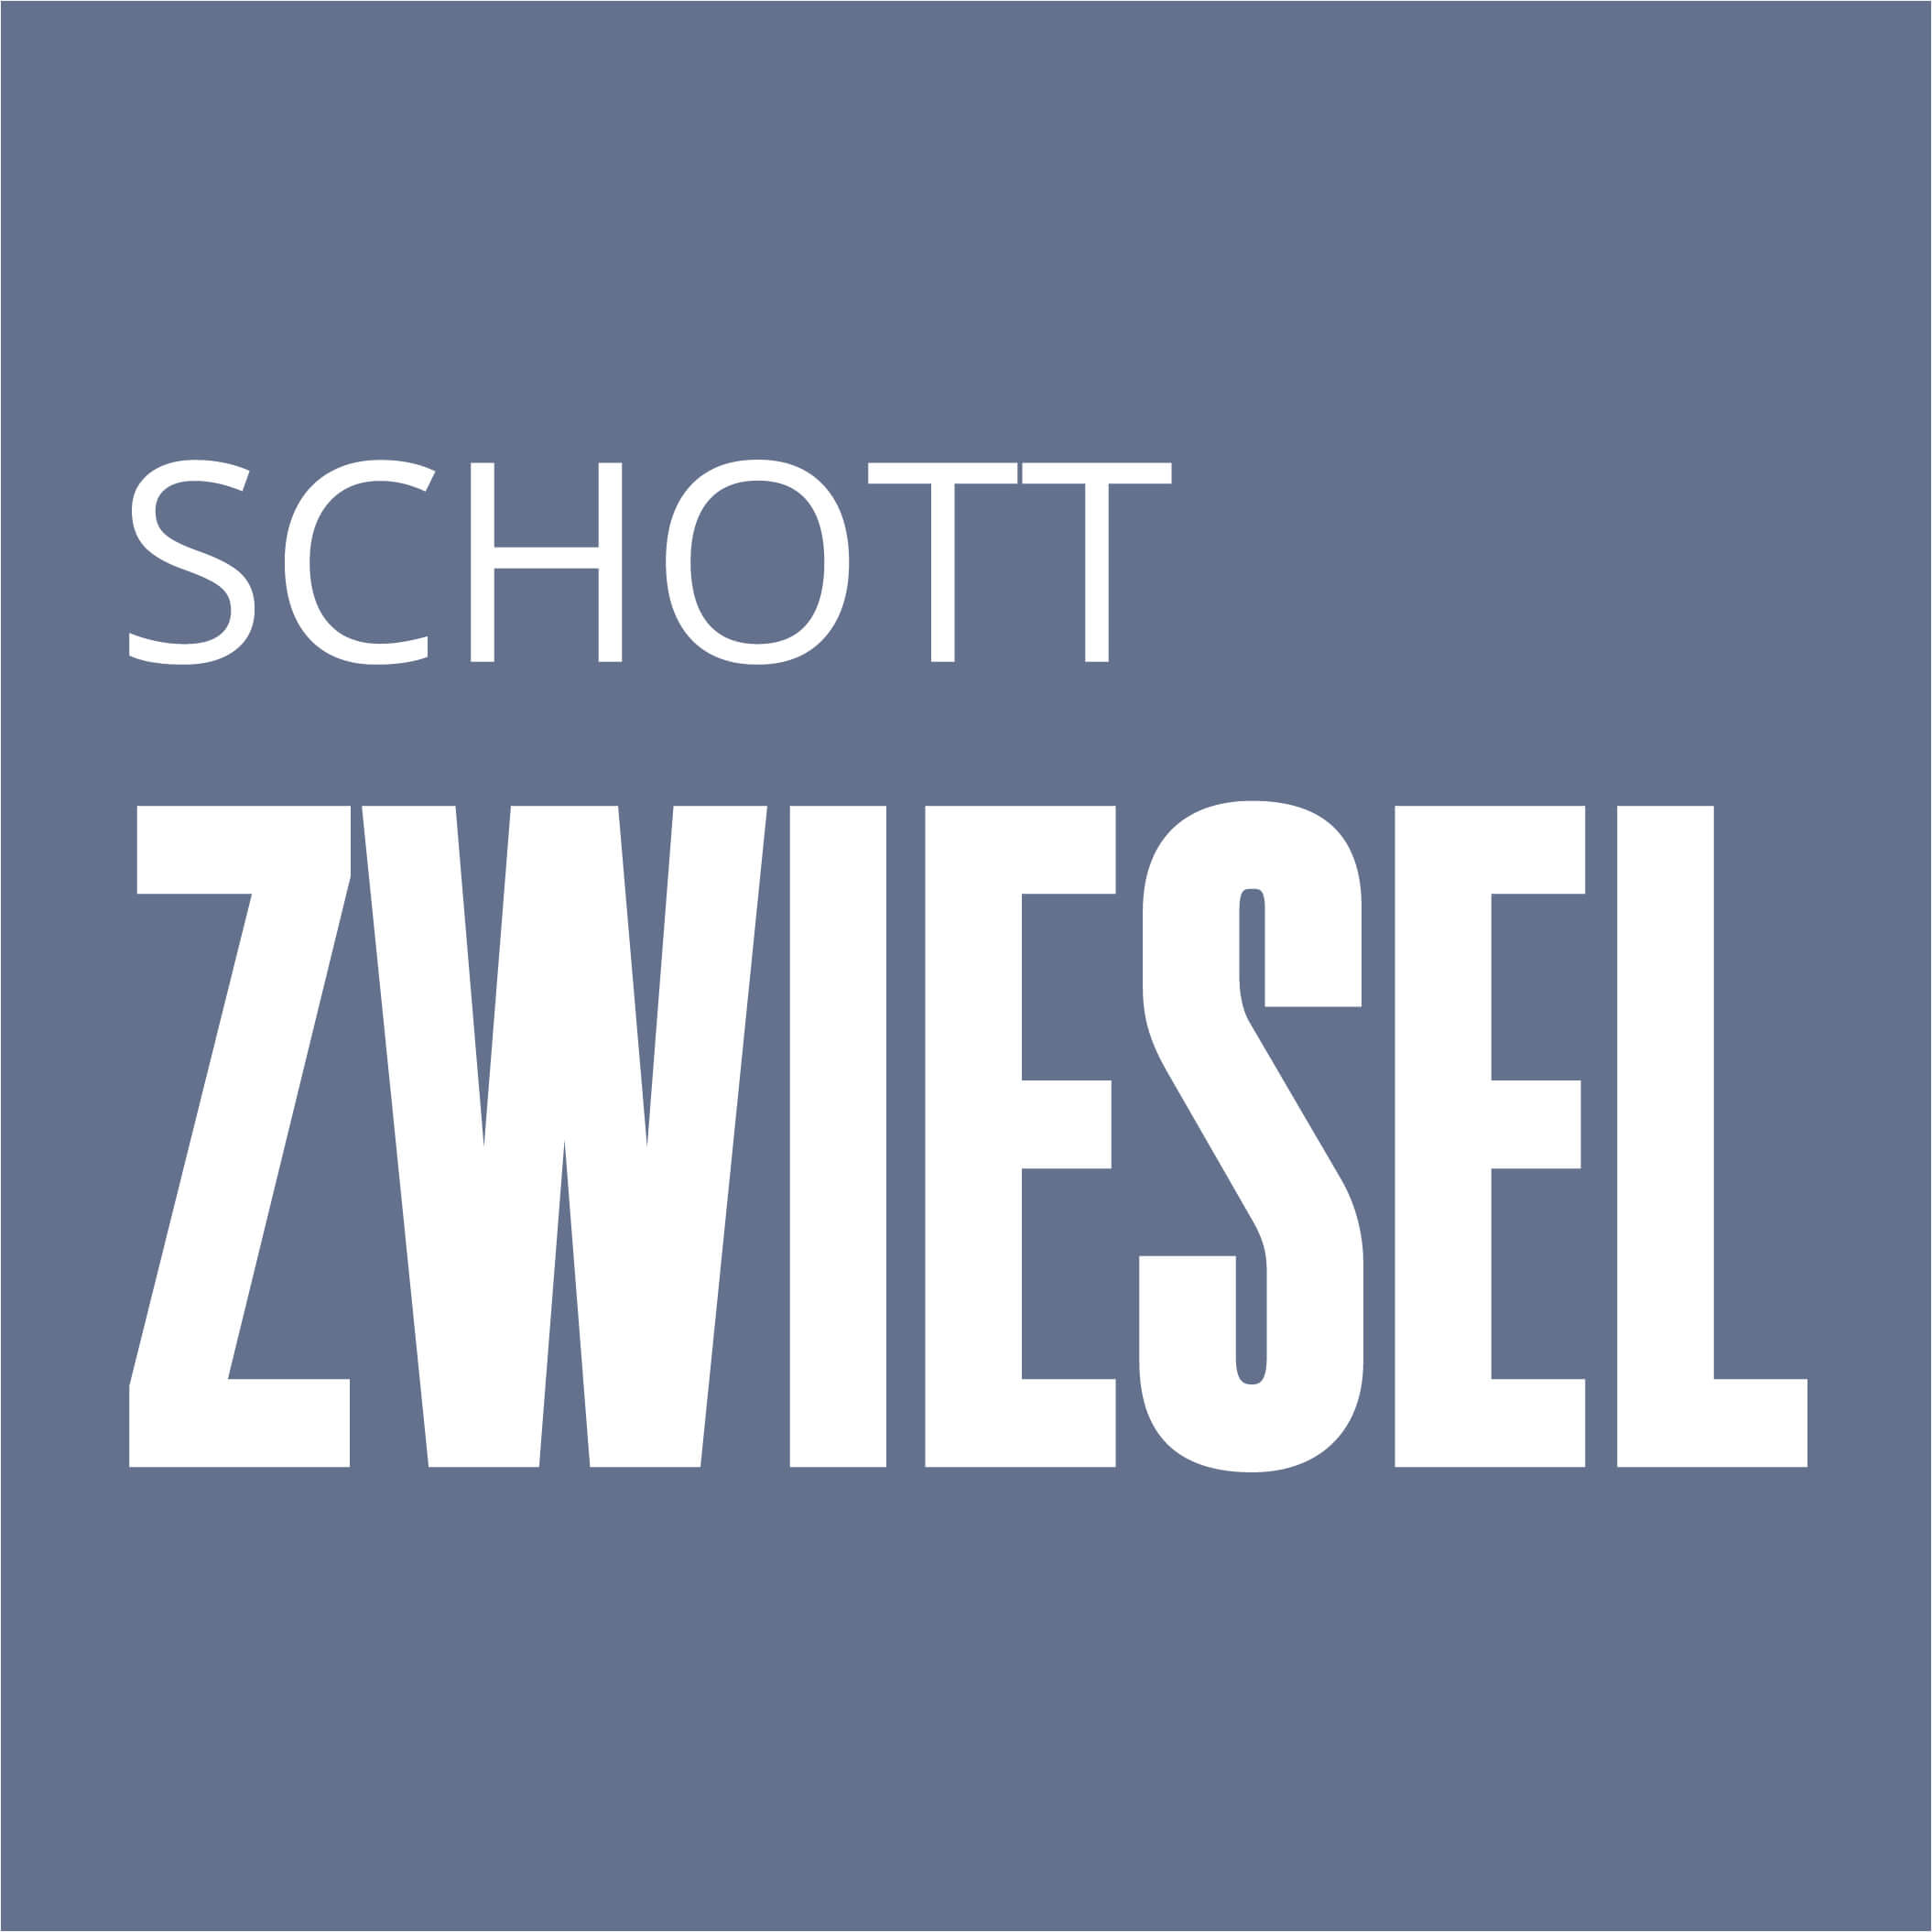 Schott Zwiesel brand